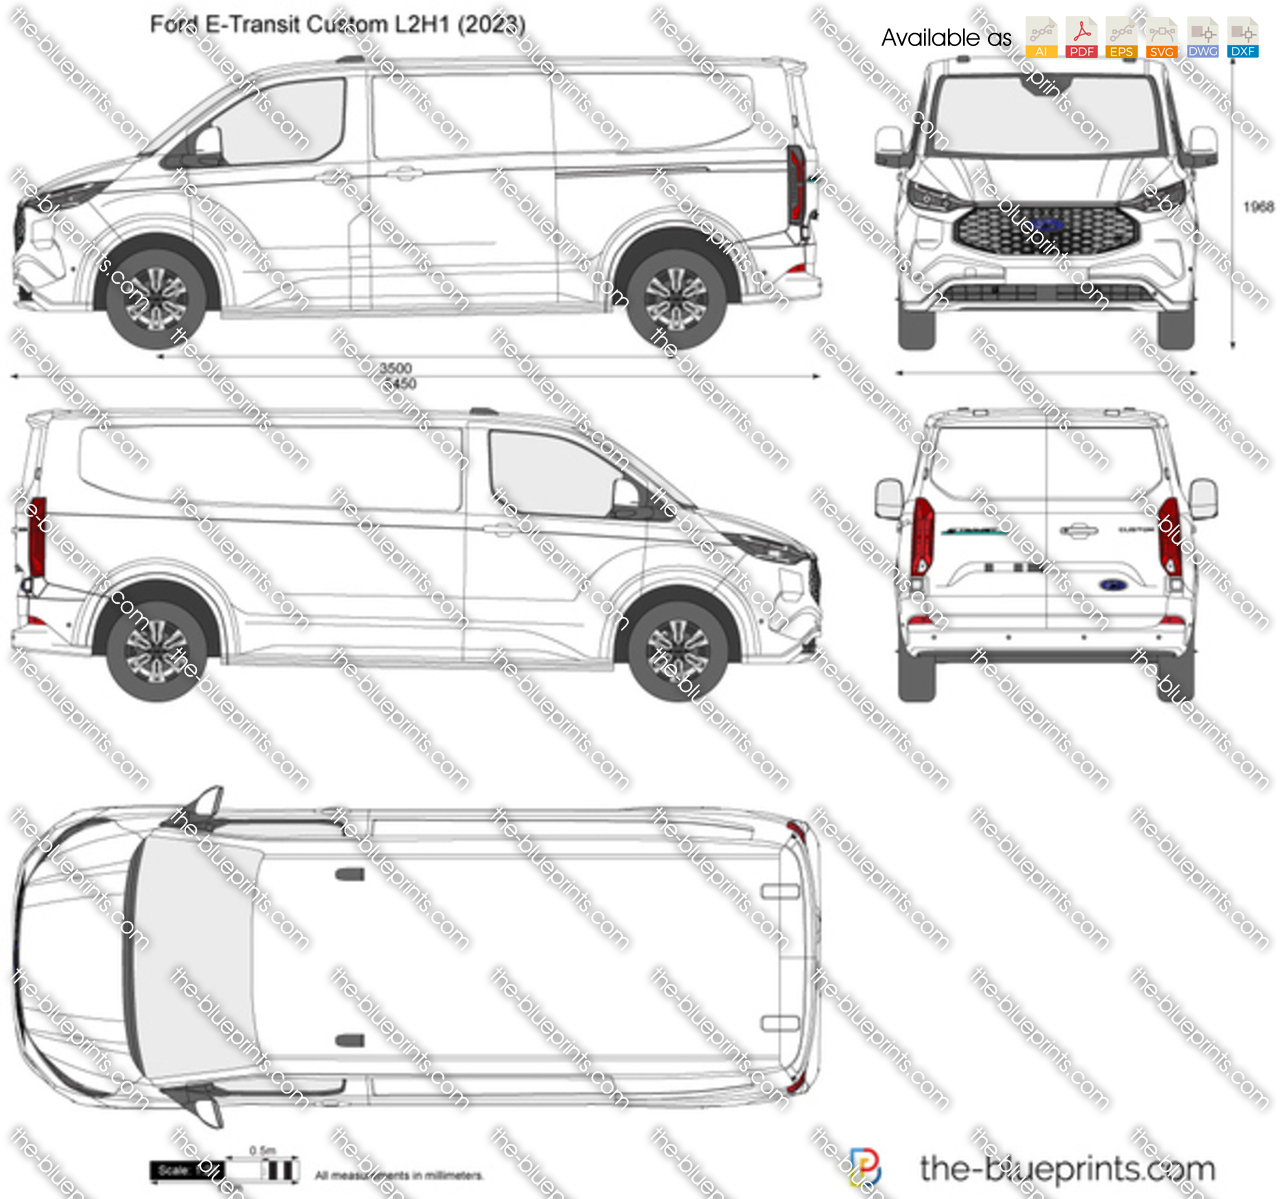 Ford E-Transit Custom L2H1 vector drawing